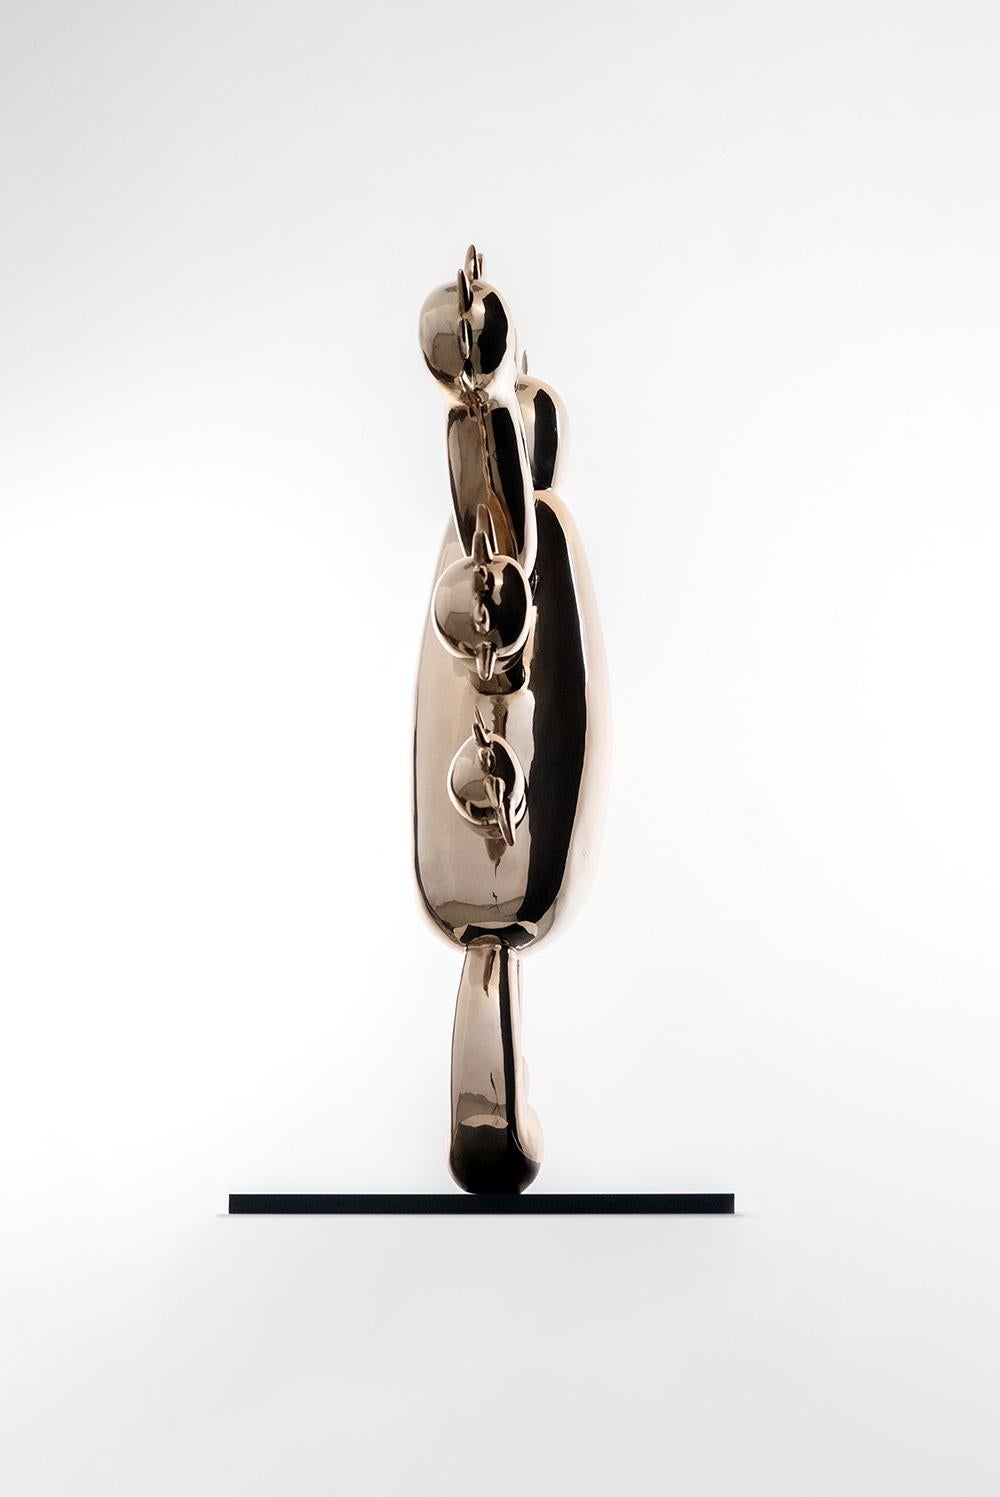 Luzar by Marcelo Martin Burgos - Bronze sculpture, golden, fantastic, monster For Sale 2